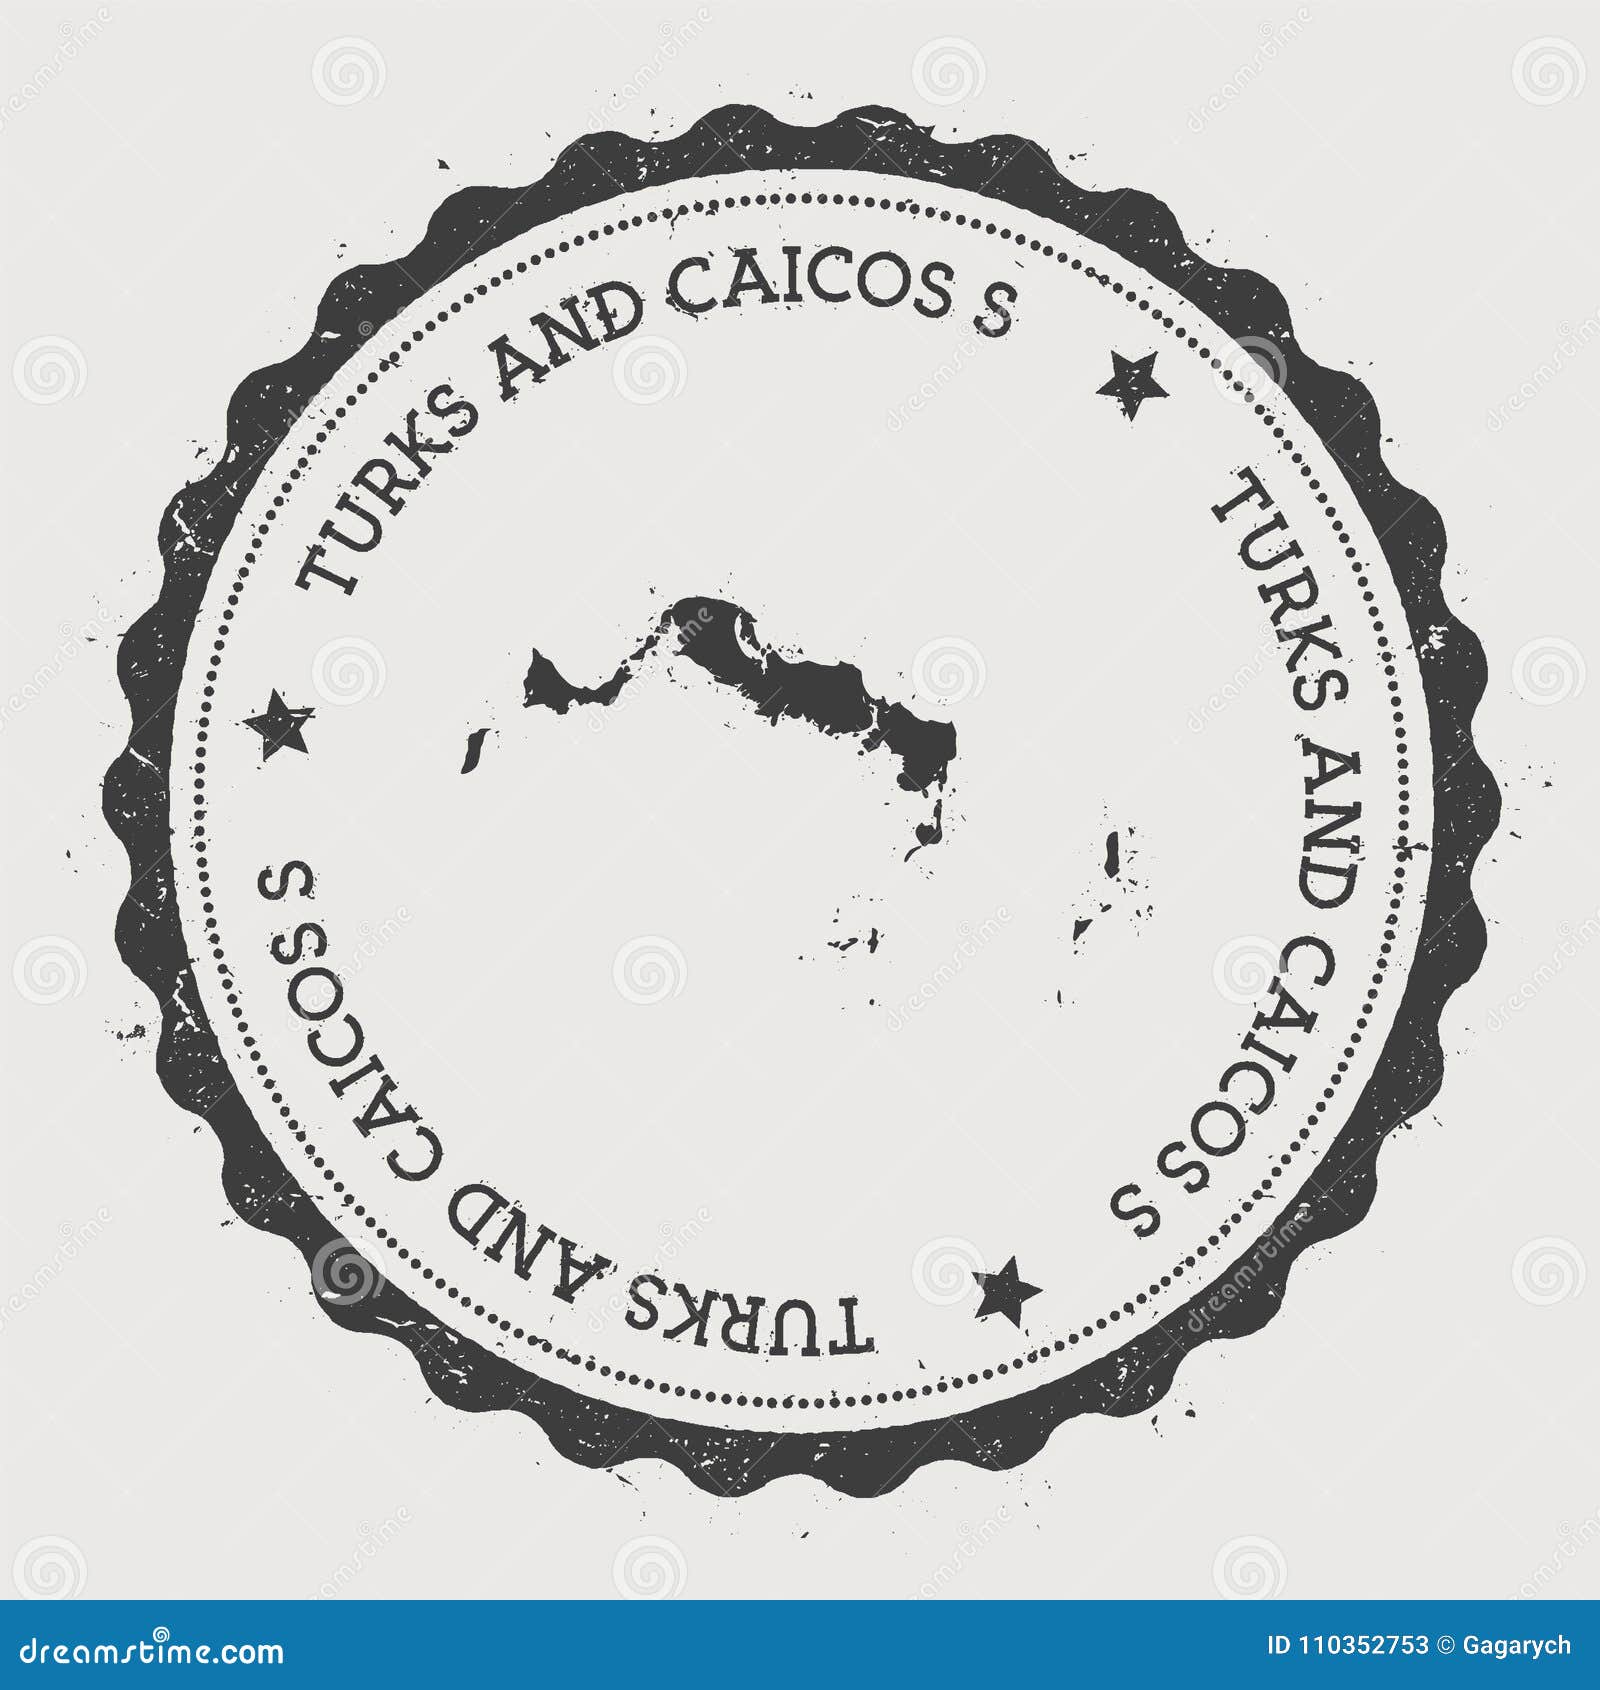 turks and caicos islands sticker.